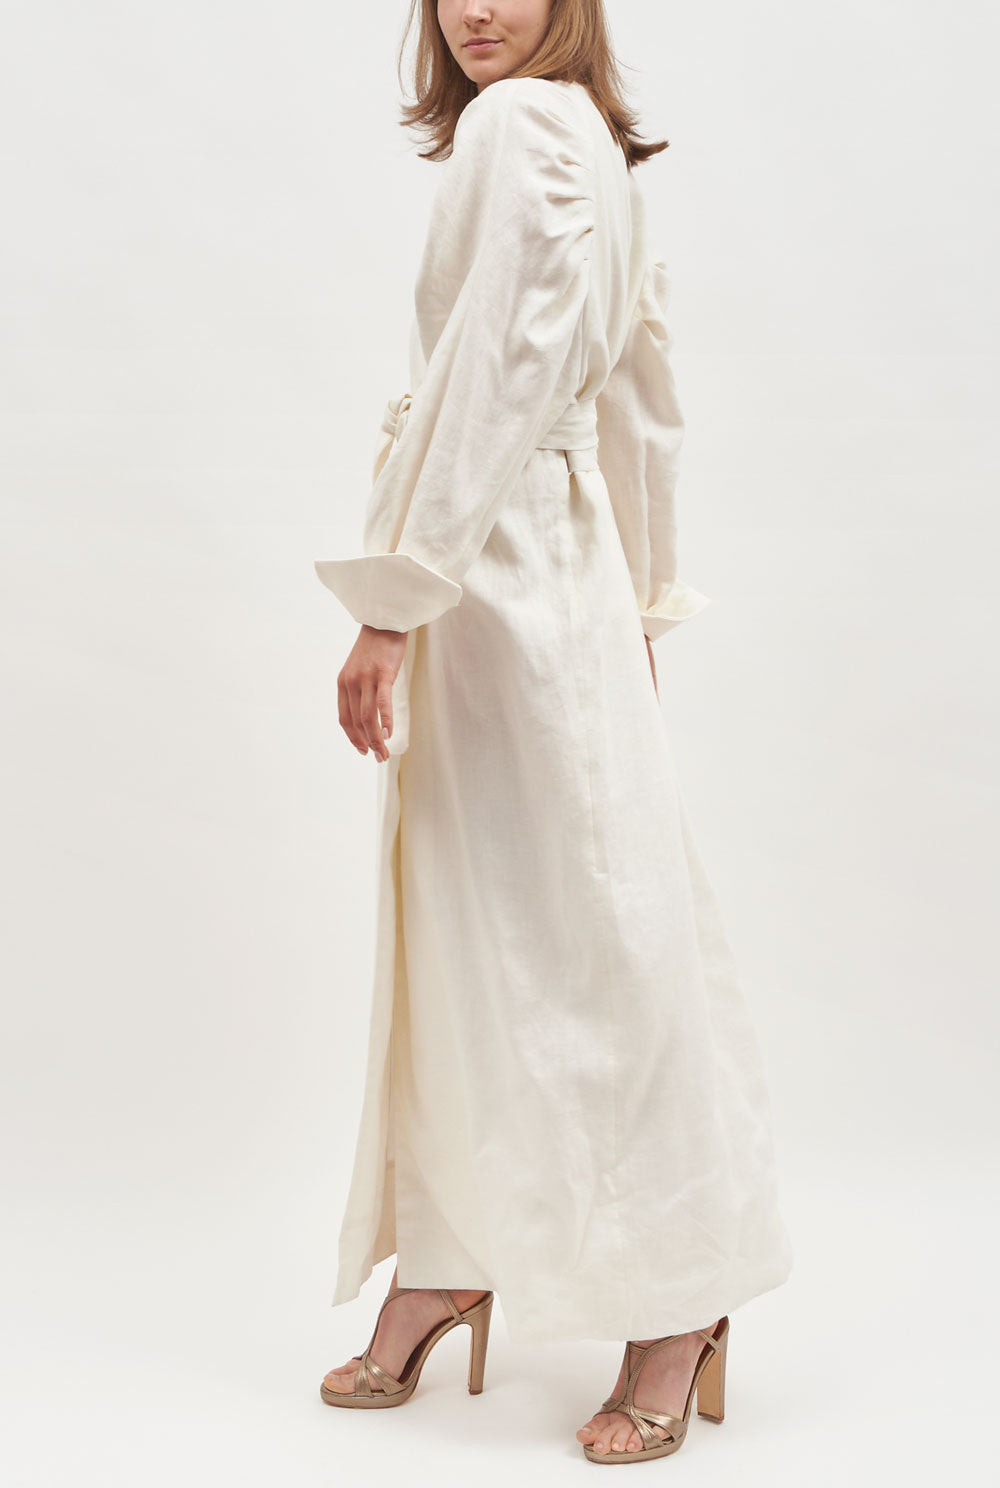 Juana linen dress - Pre Order Dress Diddo Madrid 